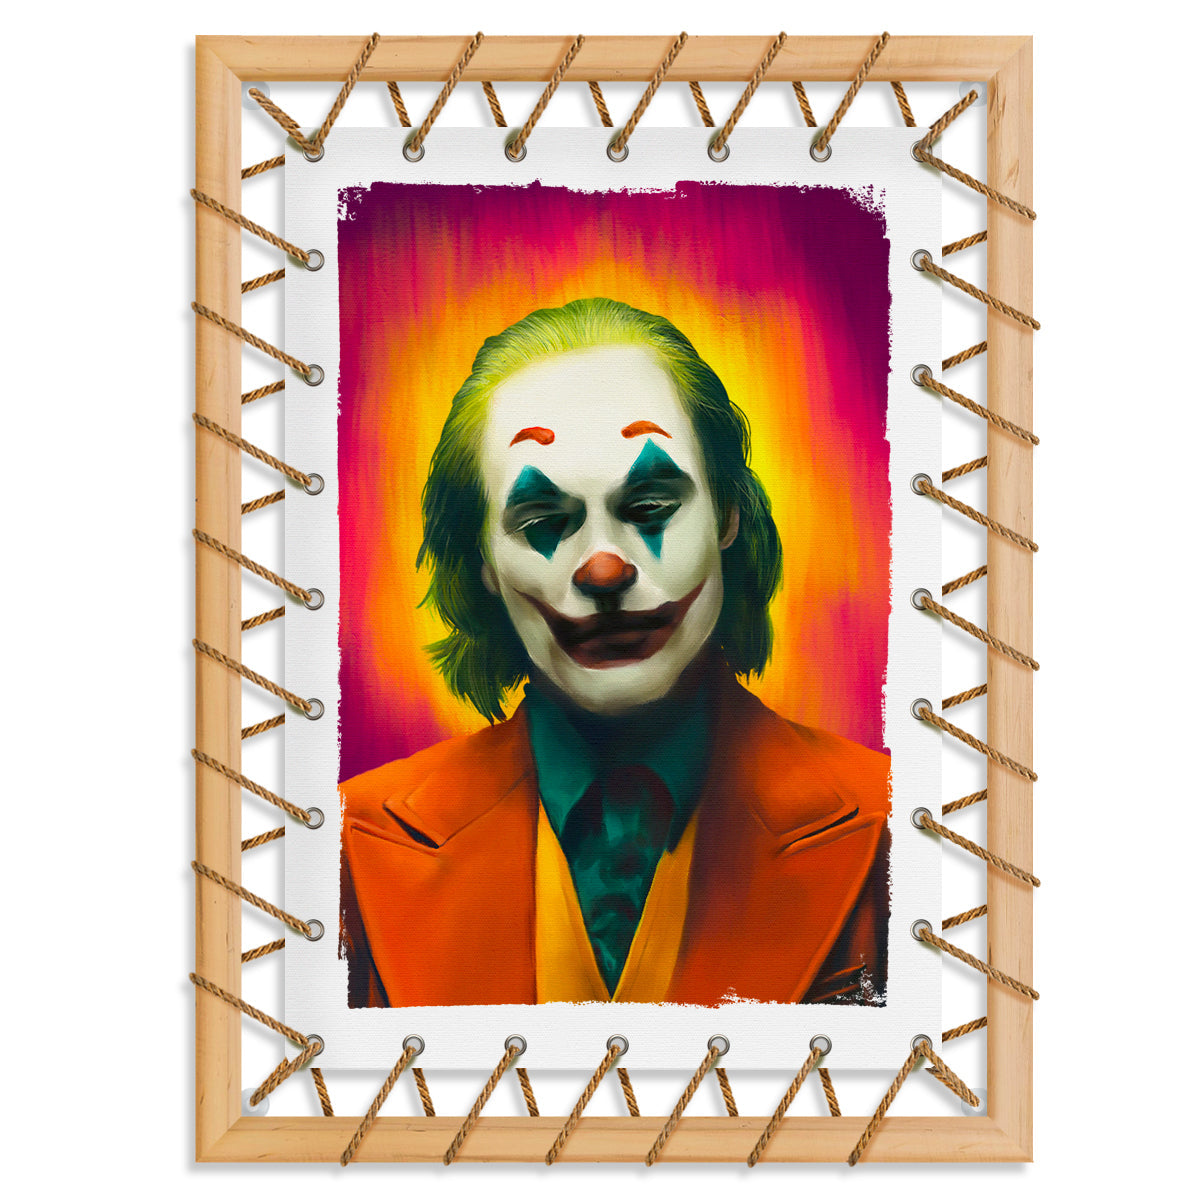 Tensotela 70x95 cm - Joker Portrait - PlastiWood (14558248)